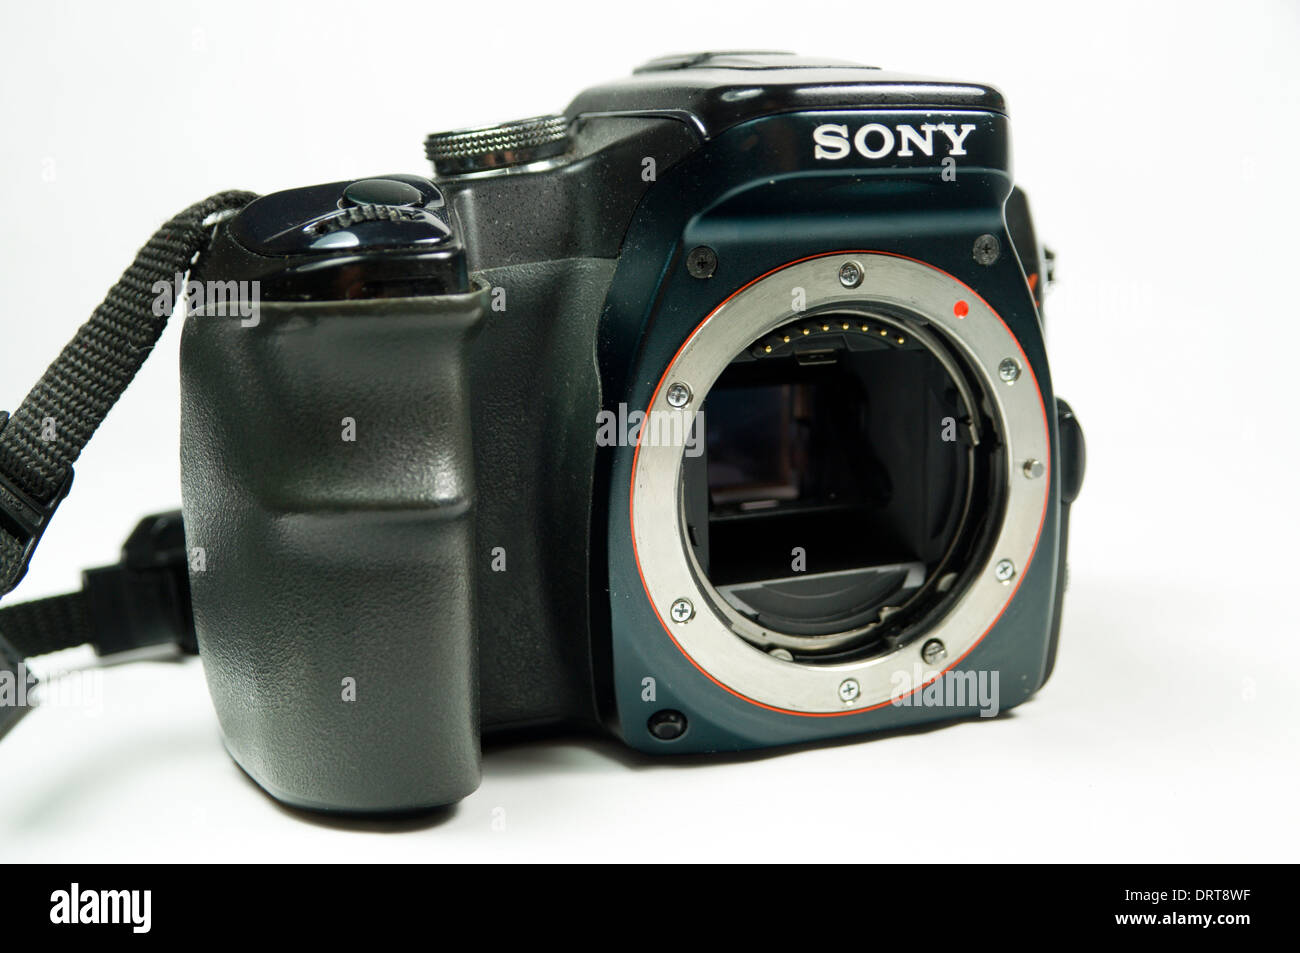 Sony Alpha 100 digital SLR camera body Stock Photo - Alamy